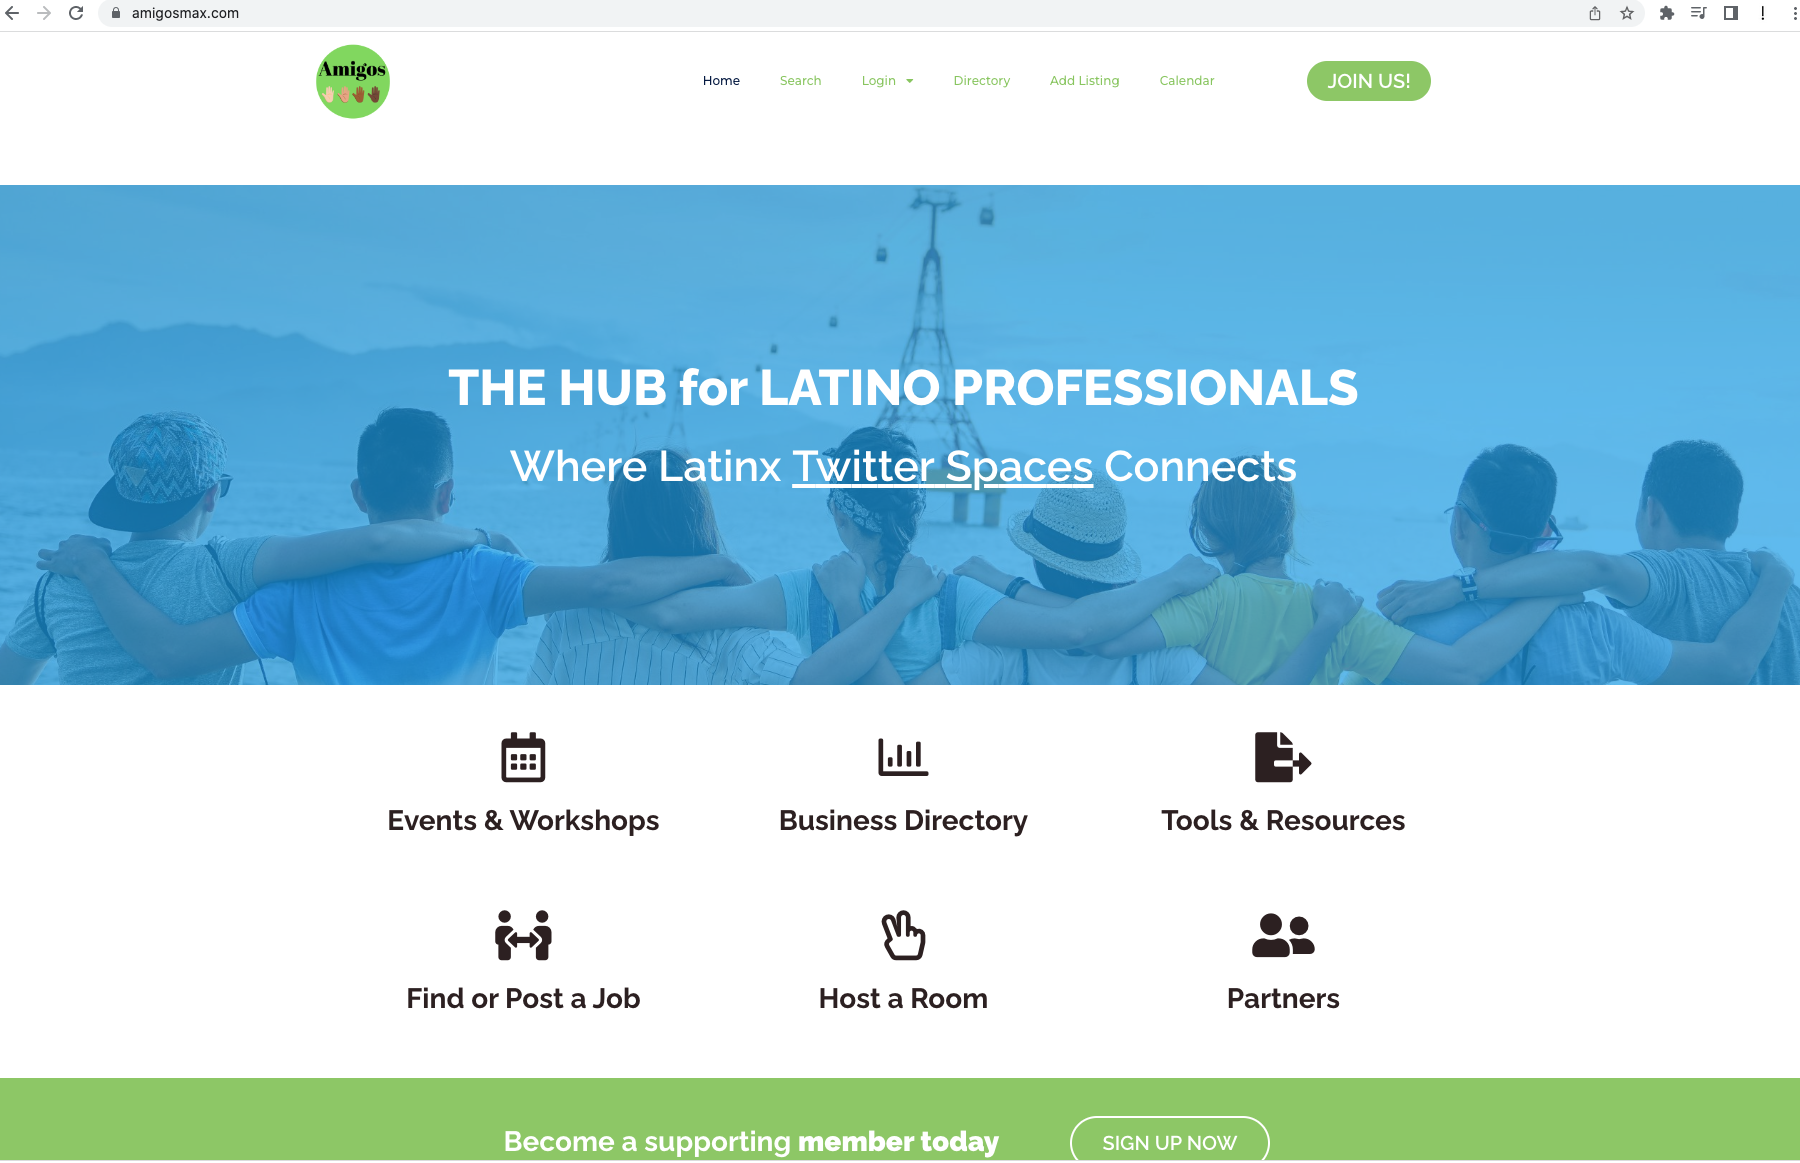 MEDIA ALERT: Calling all Latino Entrepreneurs: AMIGOS Holiday Gift